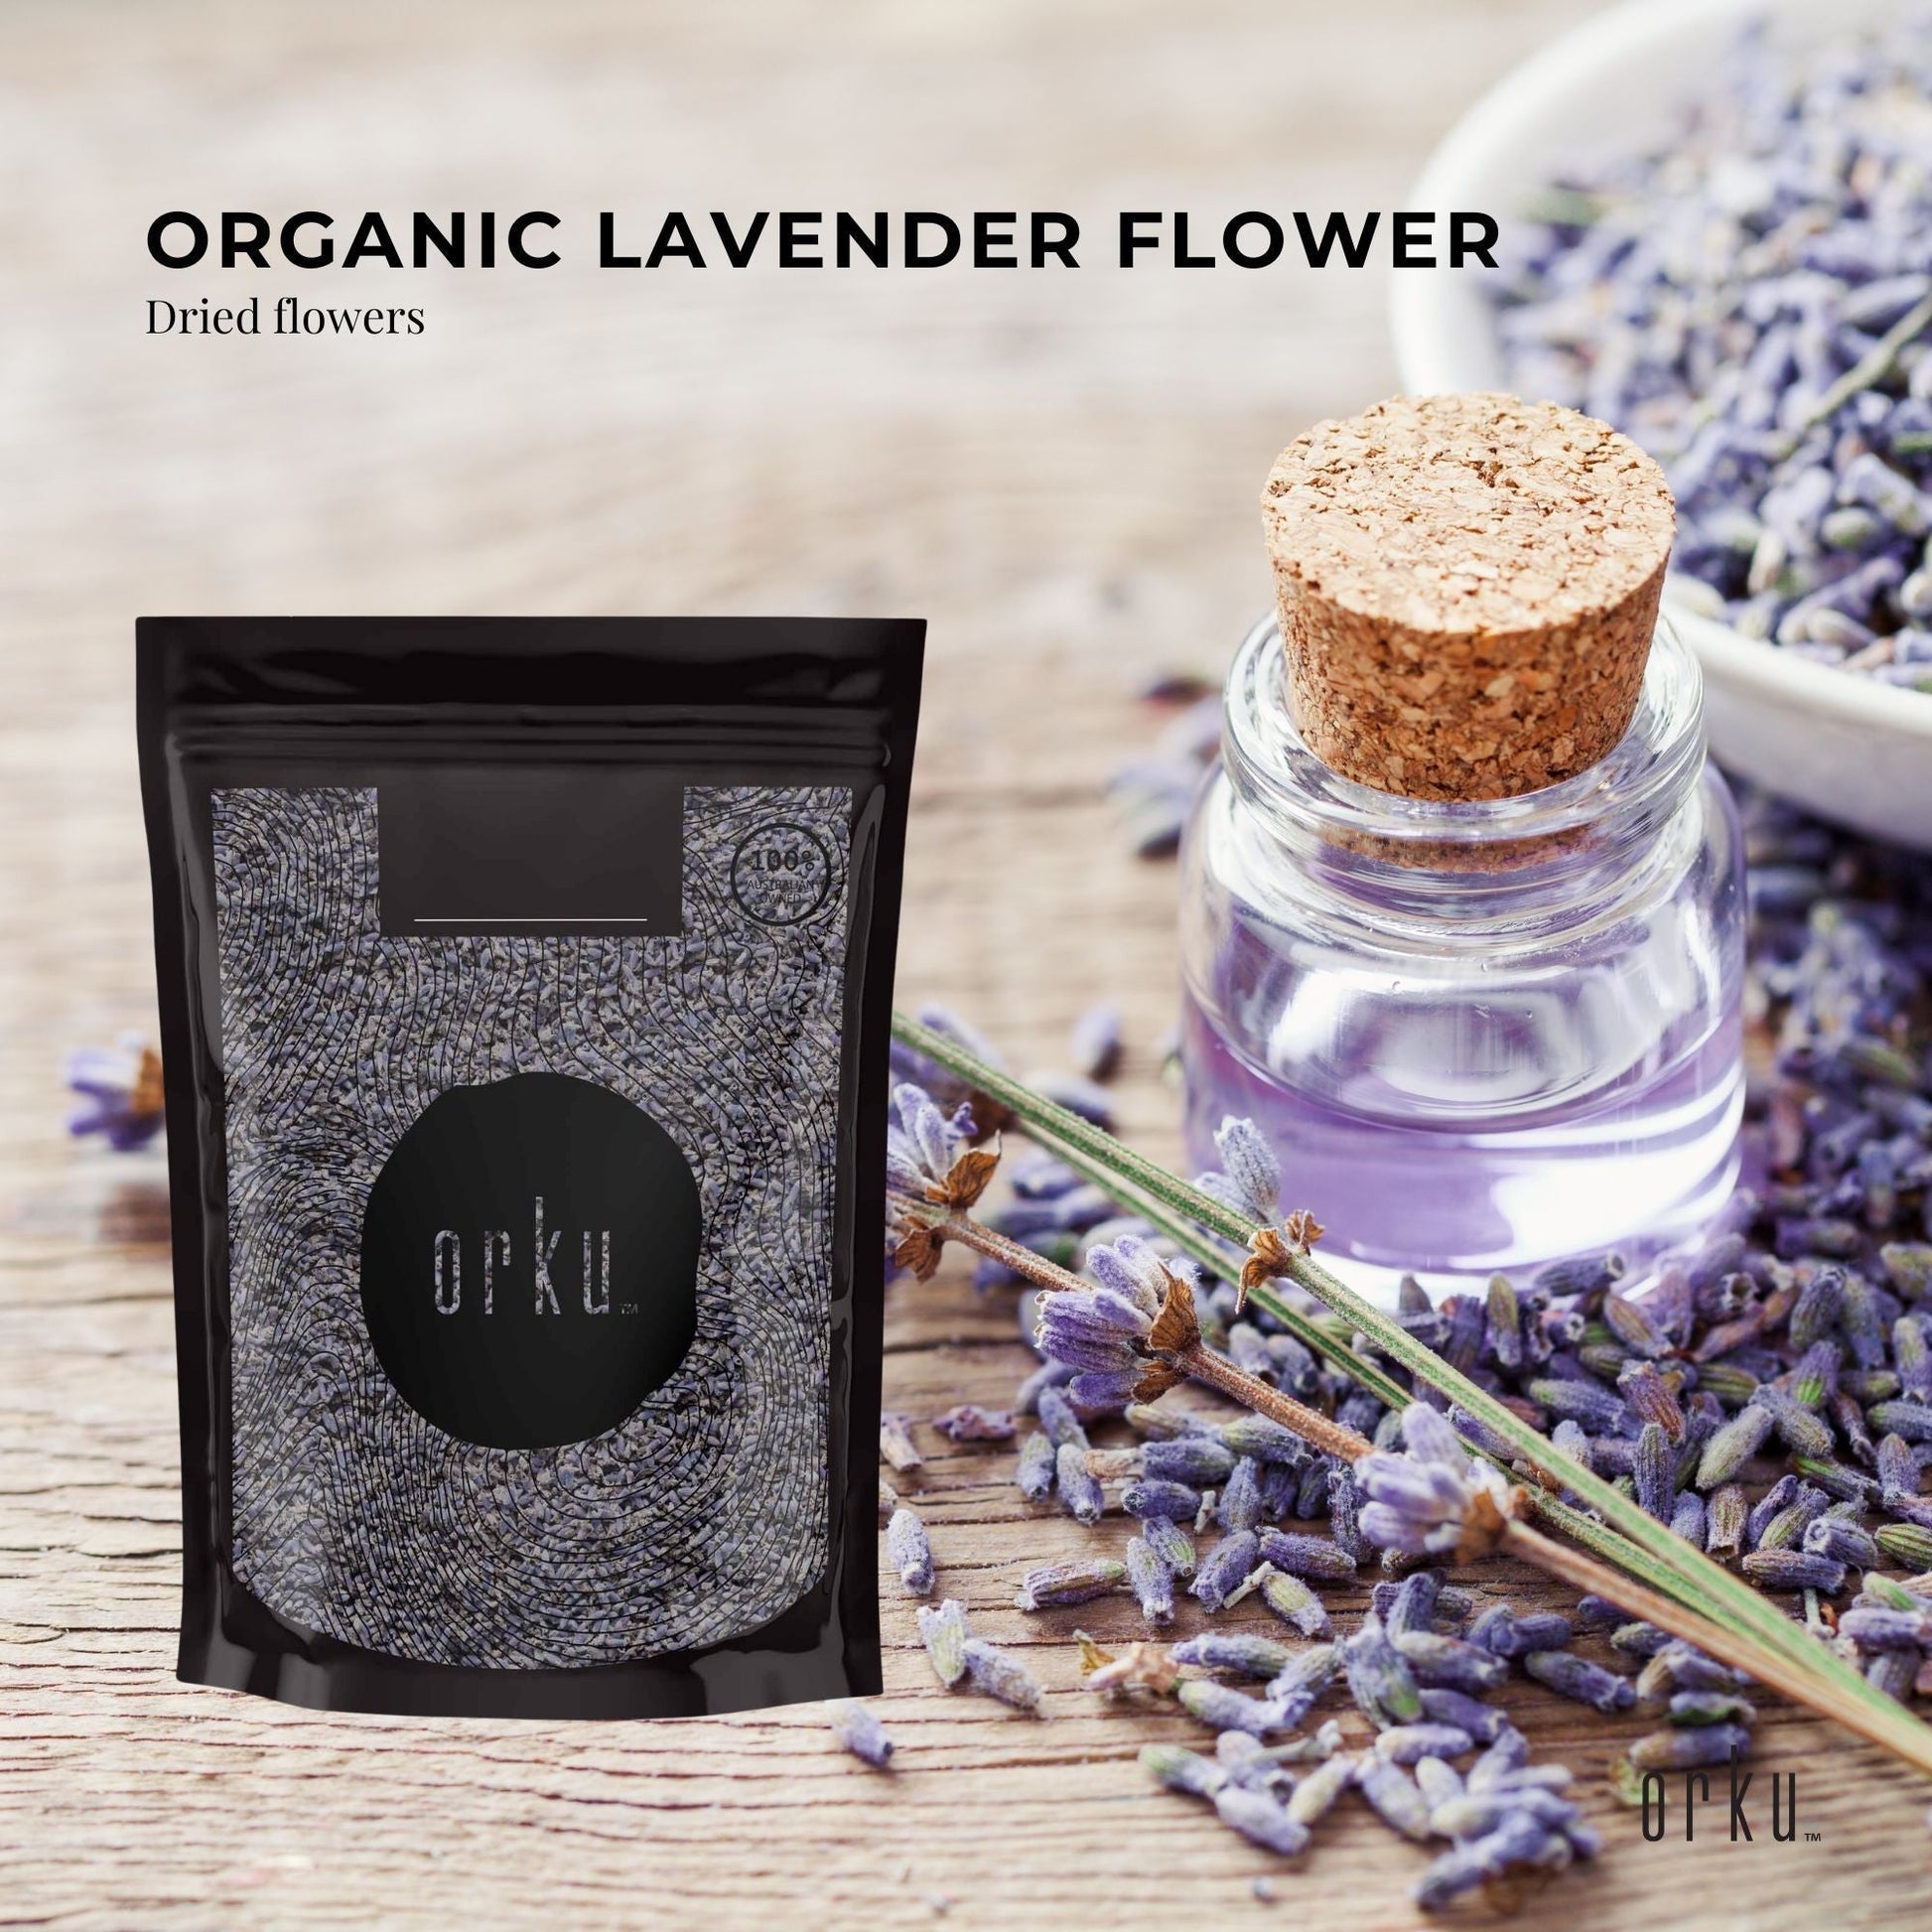 25g Organic Lavender Flower - Dried Fragrant Lavendula Angustifolia